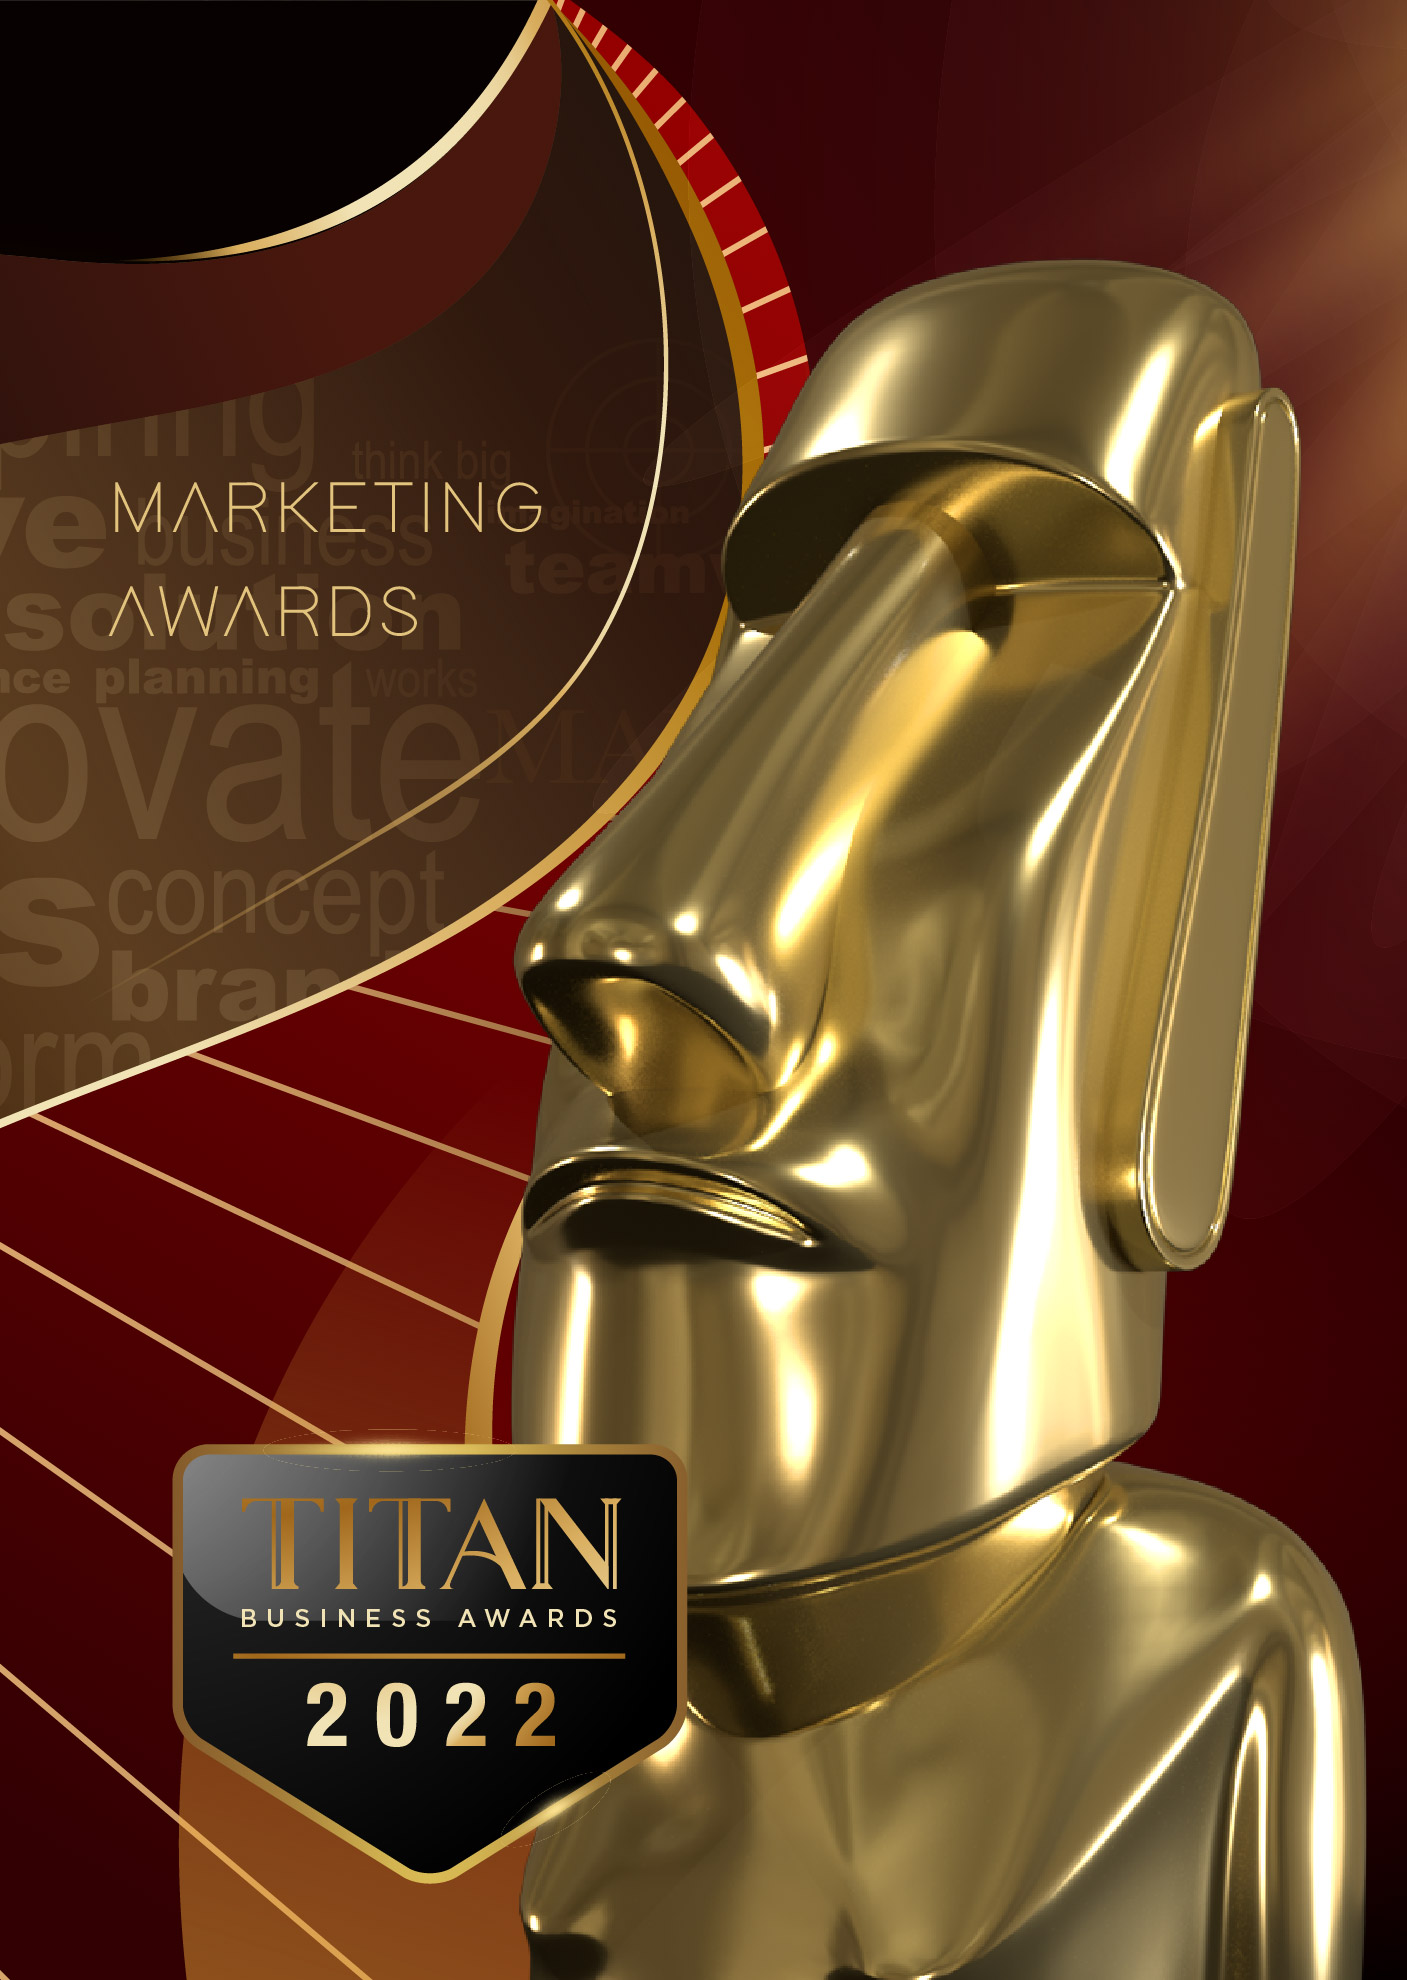 TITAN Marketing Awards | International Business Awards